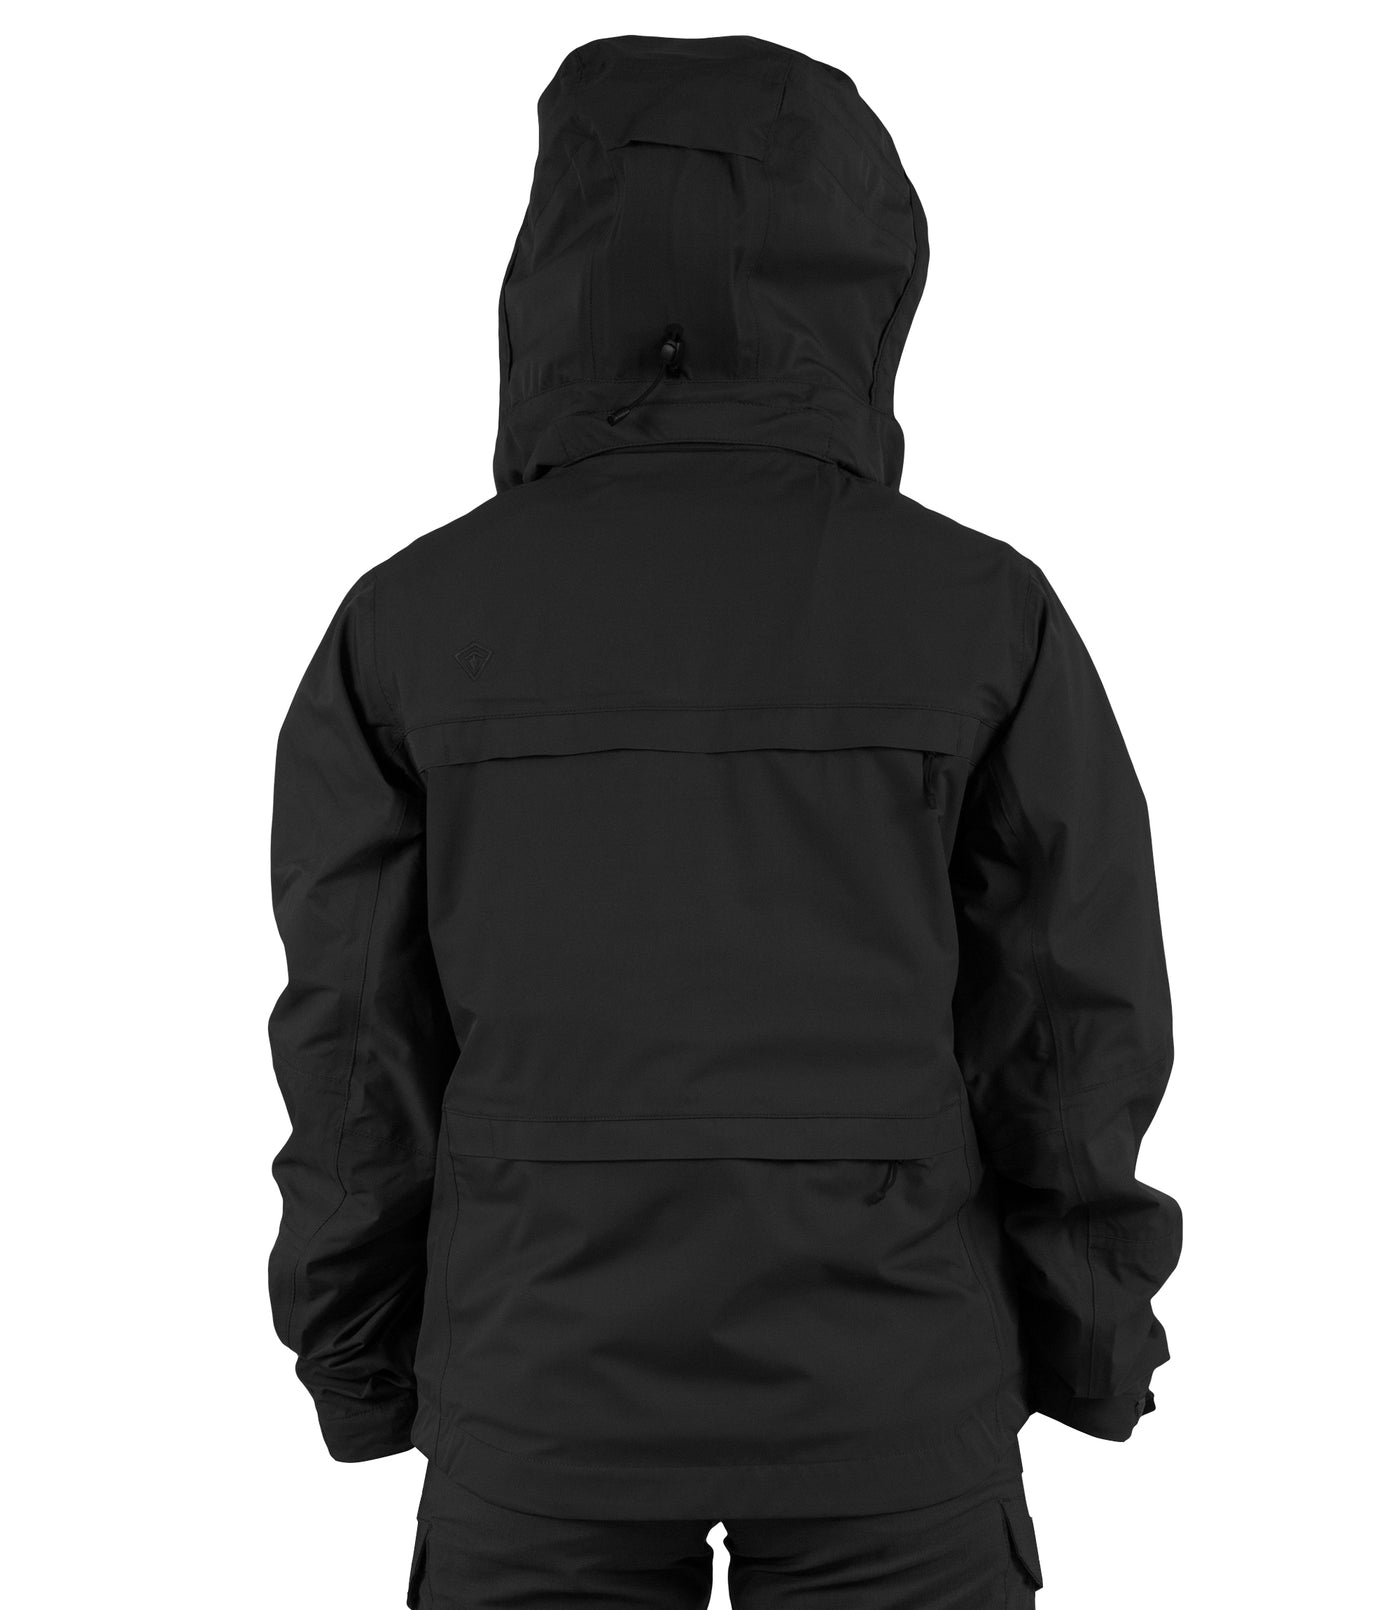 Back Hoodie of Women’s Tactix System Jacket in Black